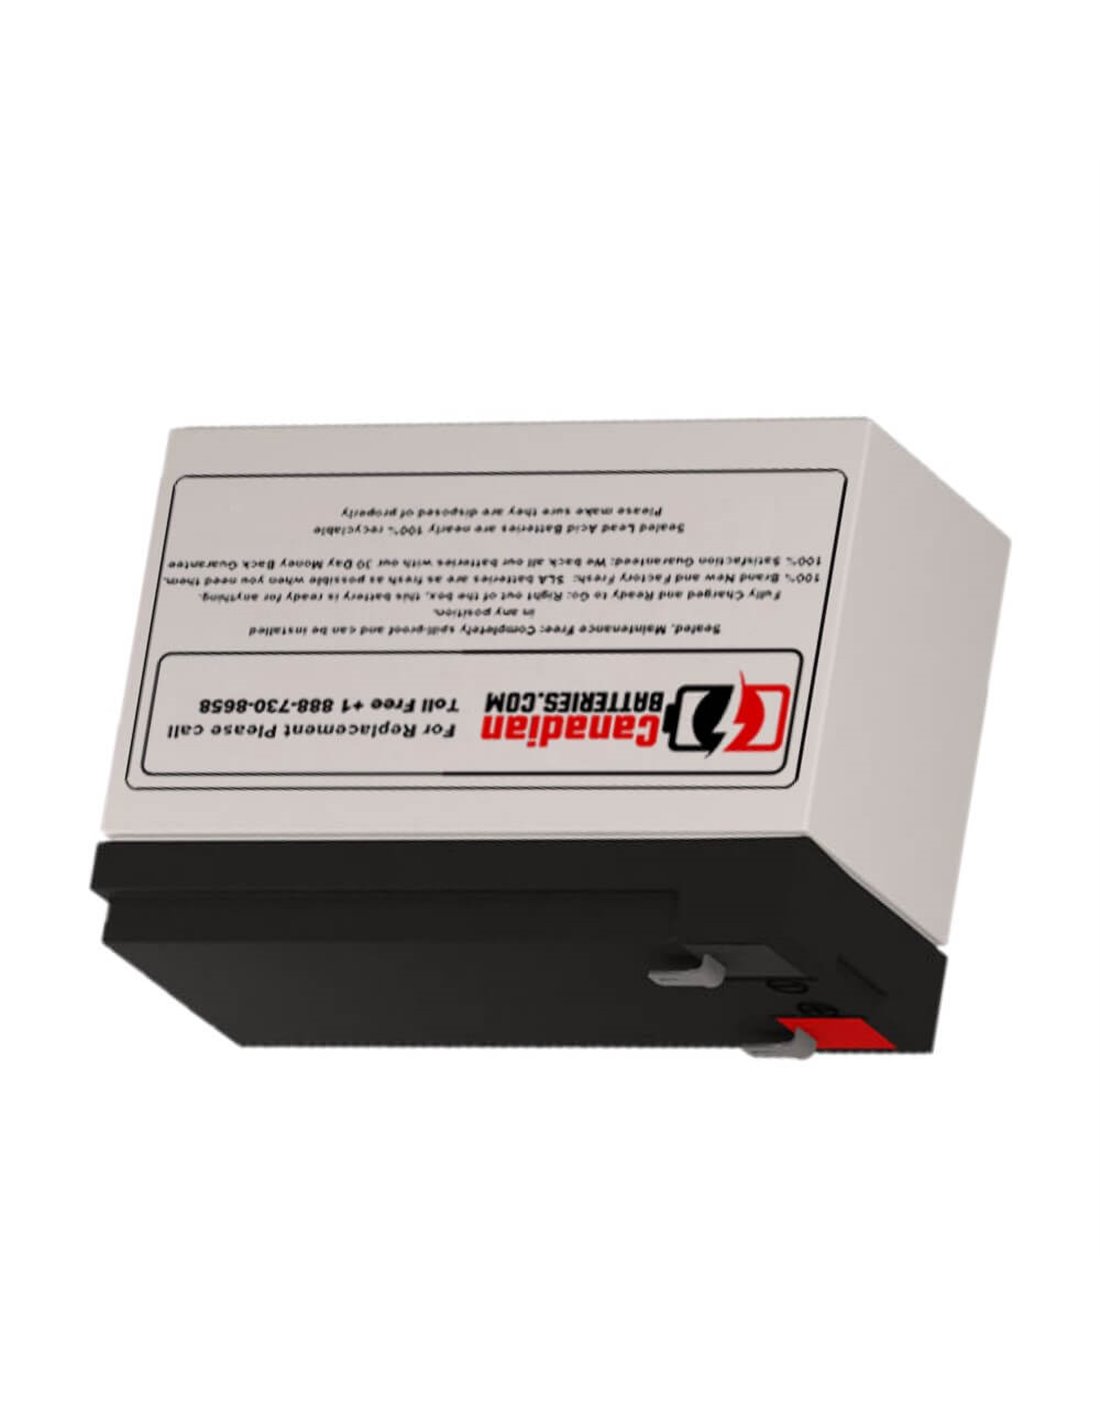 Battery for Powercom Black Knight Pro Bnt-600ap UPS, 1 x 12V, 7Ah - 84Wh